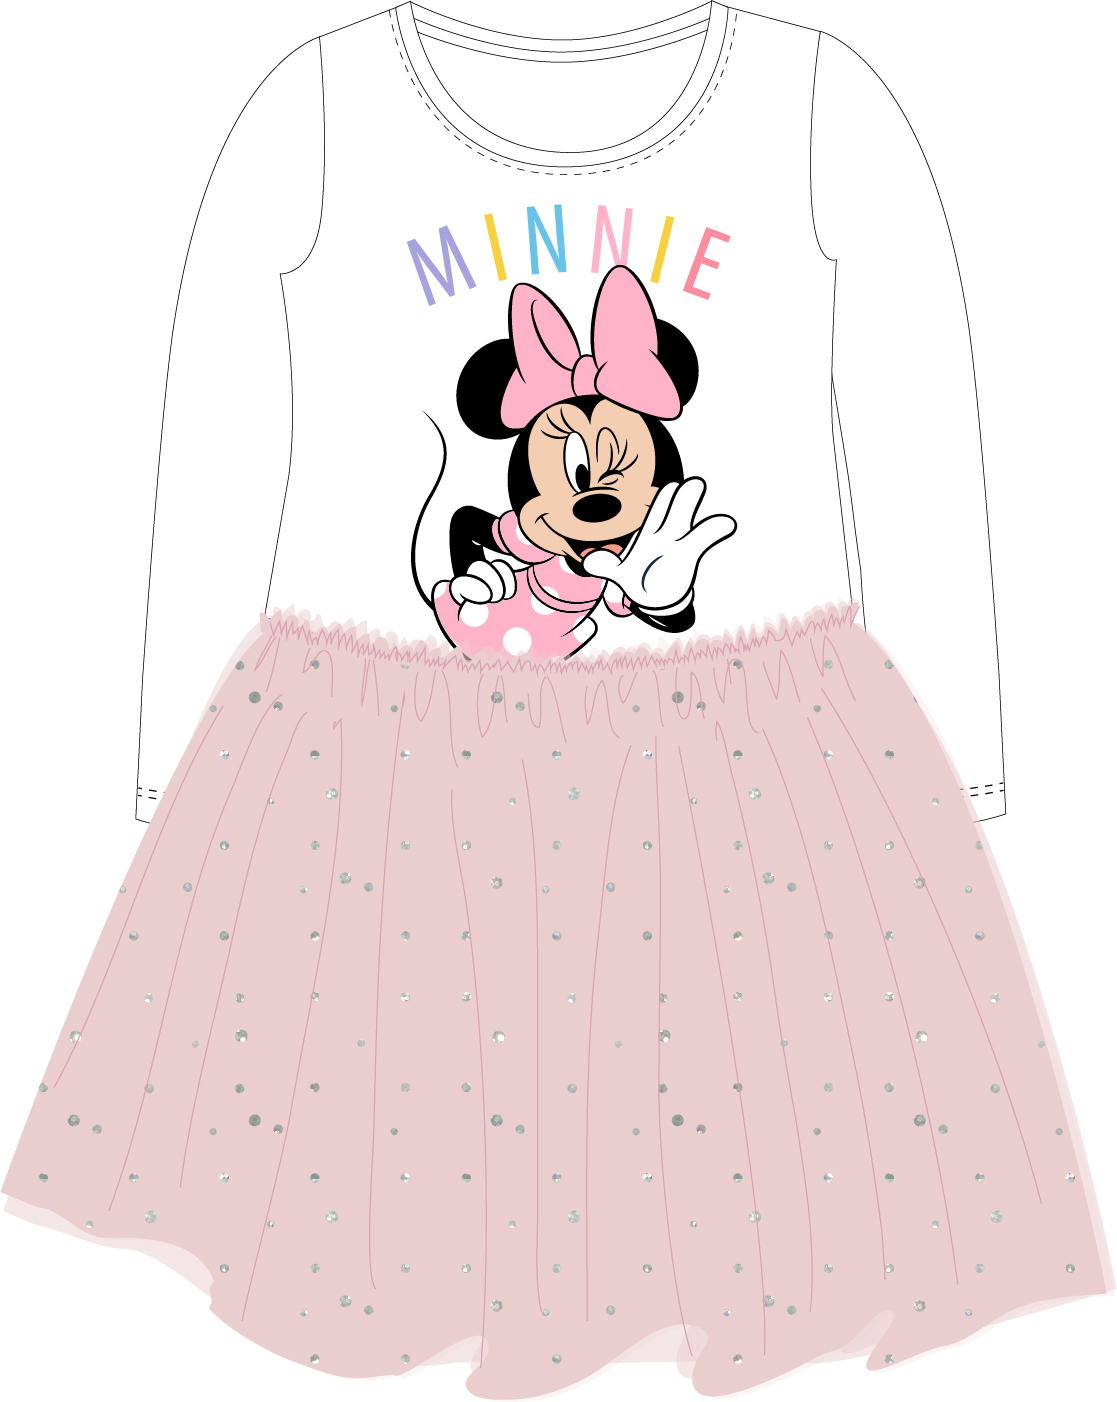 Minnie Mouse - licence Dívčí šaty - Minnie Mouse 5223B217, bílá / růžová Barva: Bílá, Velikost: 98